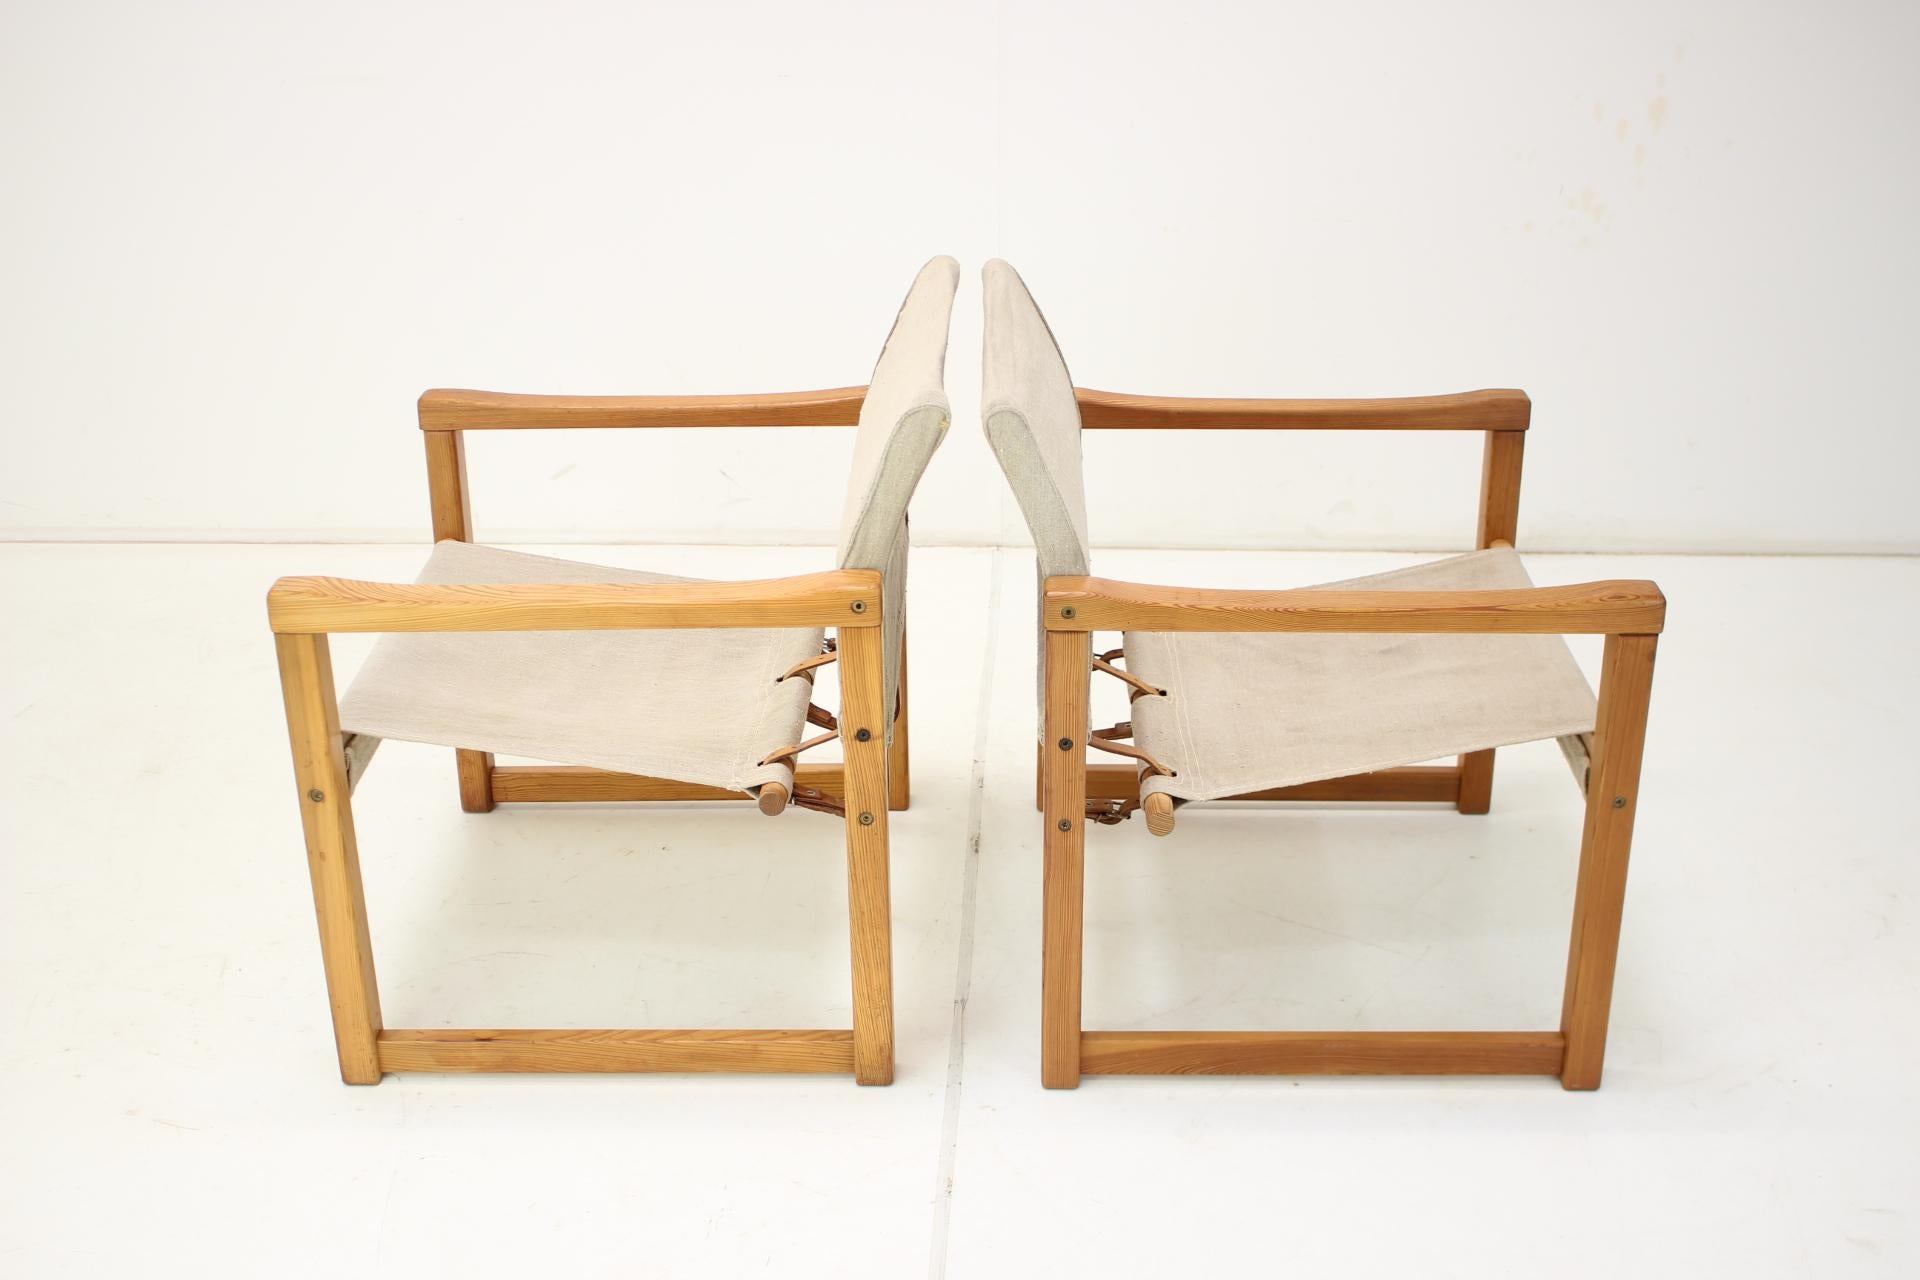 - 1980s
- Designer: Karin Mobring for Ikea
- Model Diana safari chair
- Textile (canvas)
